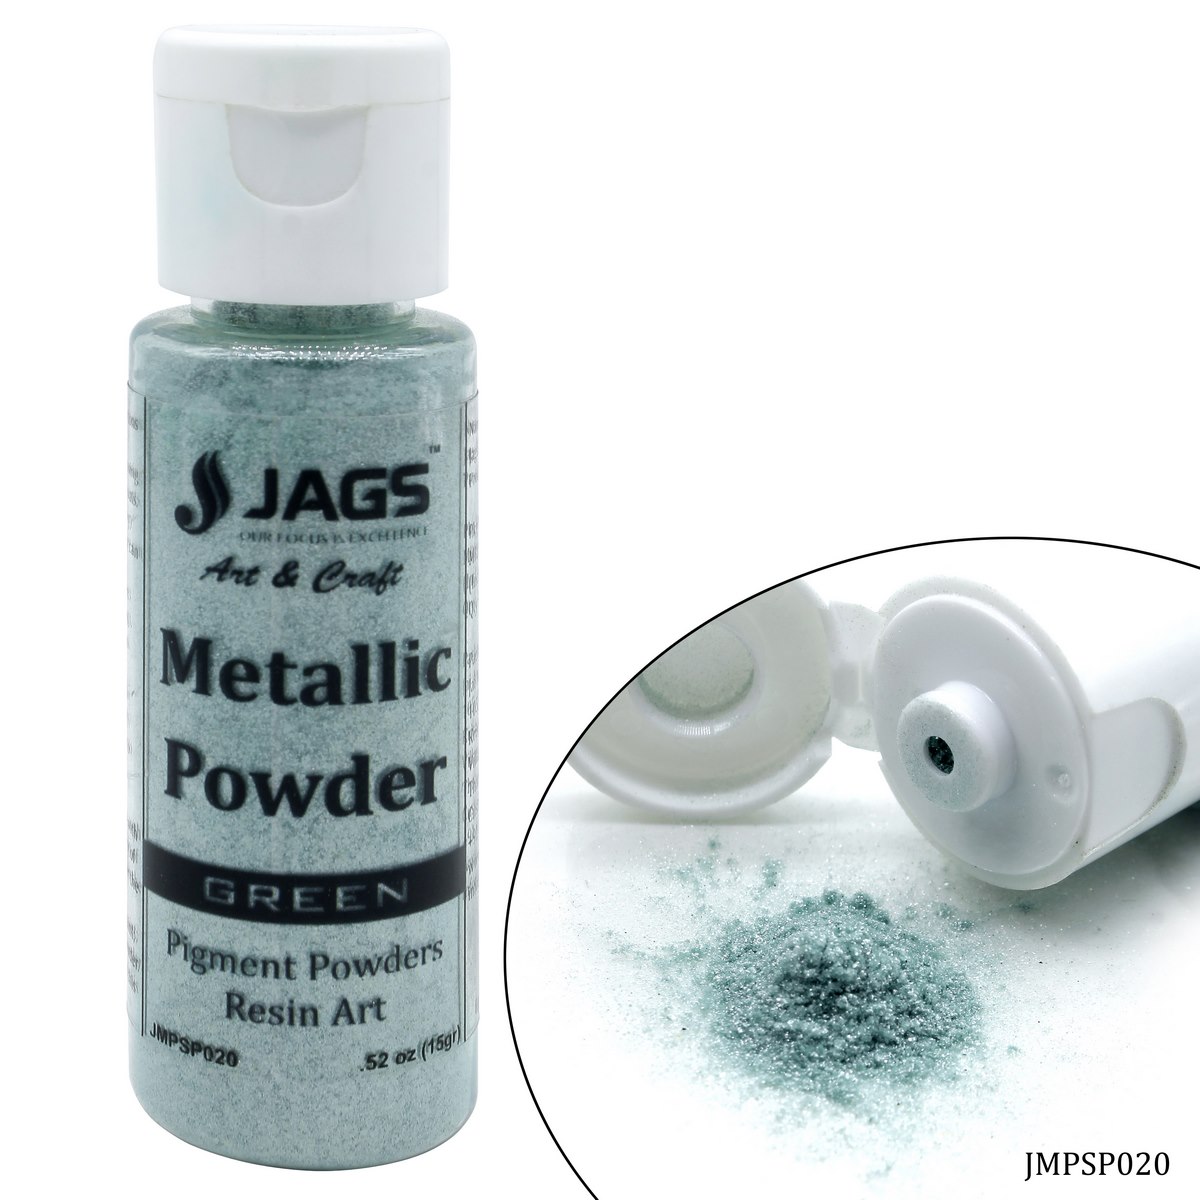 Jags Metallic Powder Green 15gm JMPSP020